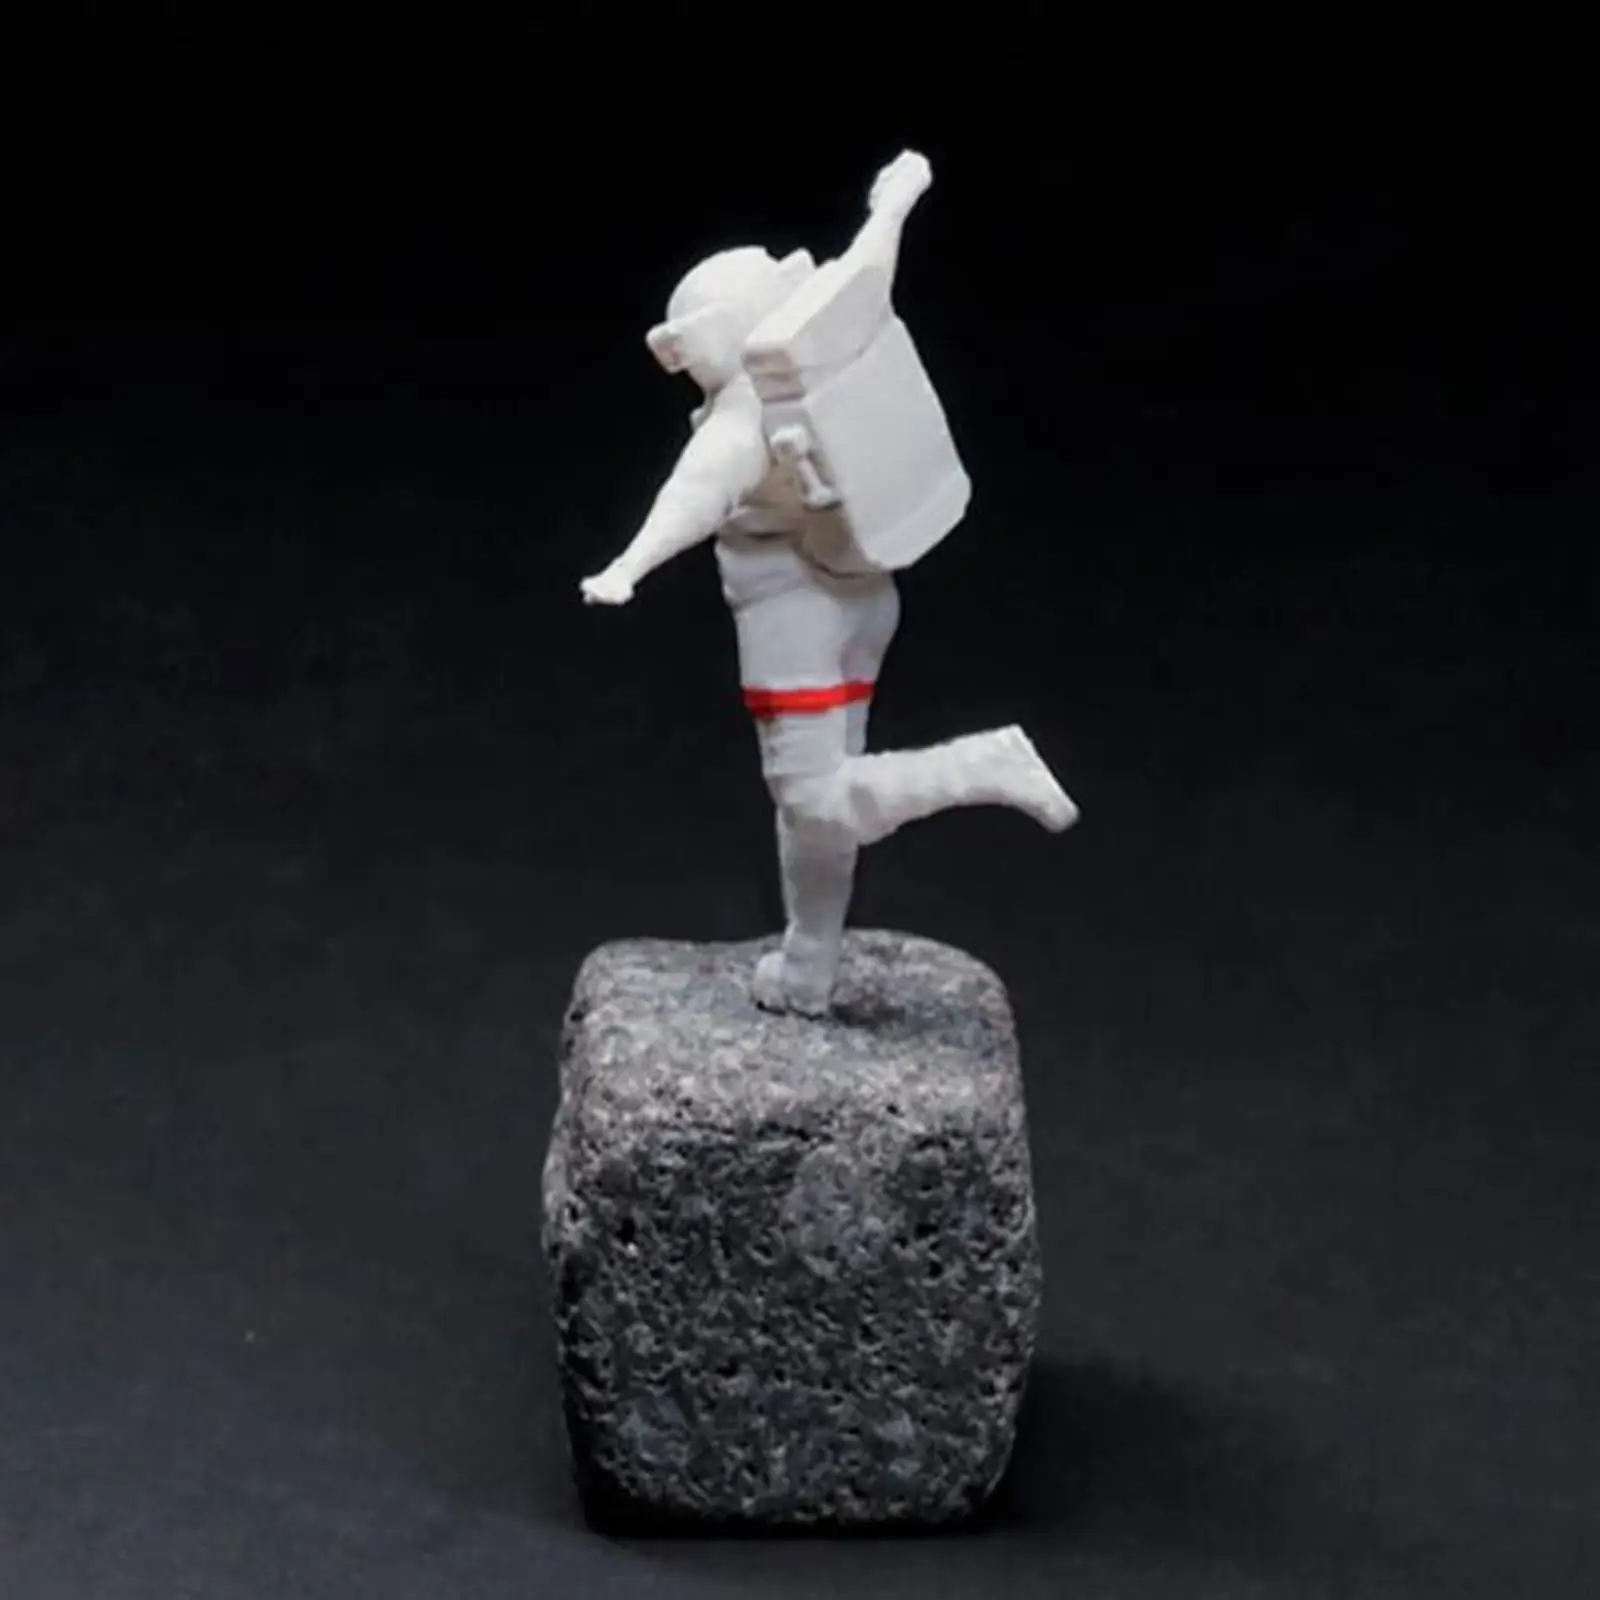 1/64 Scale Figure Spaceman Astronaut Desktop Ornament Miniature Layout